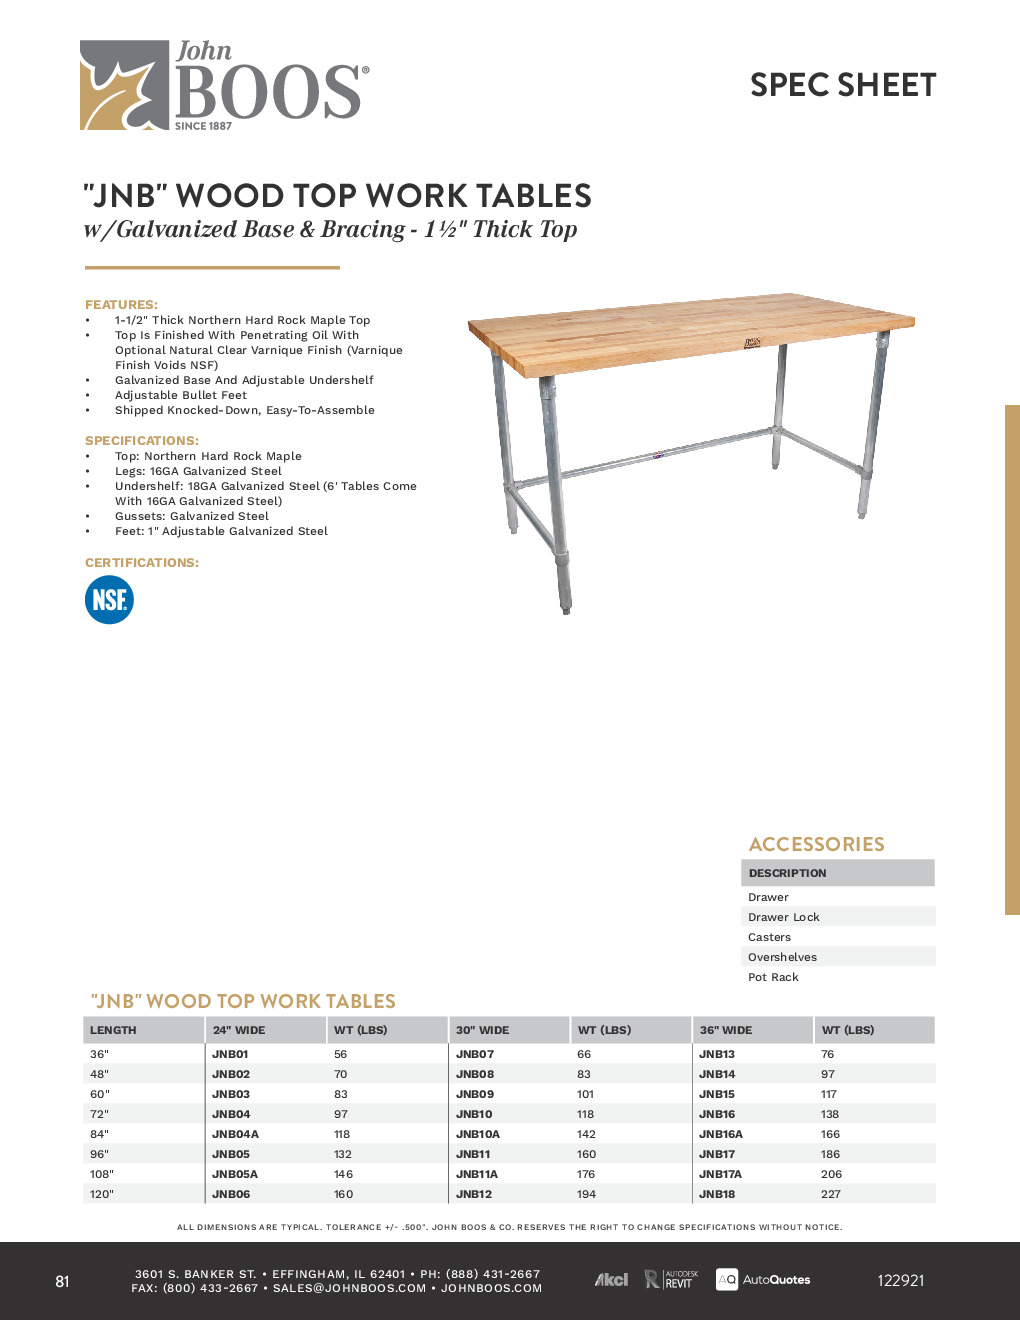 John Boos JNB04-X Wood Top Work Table